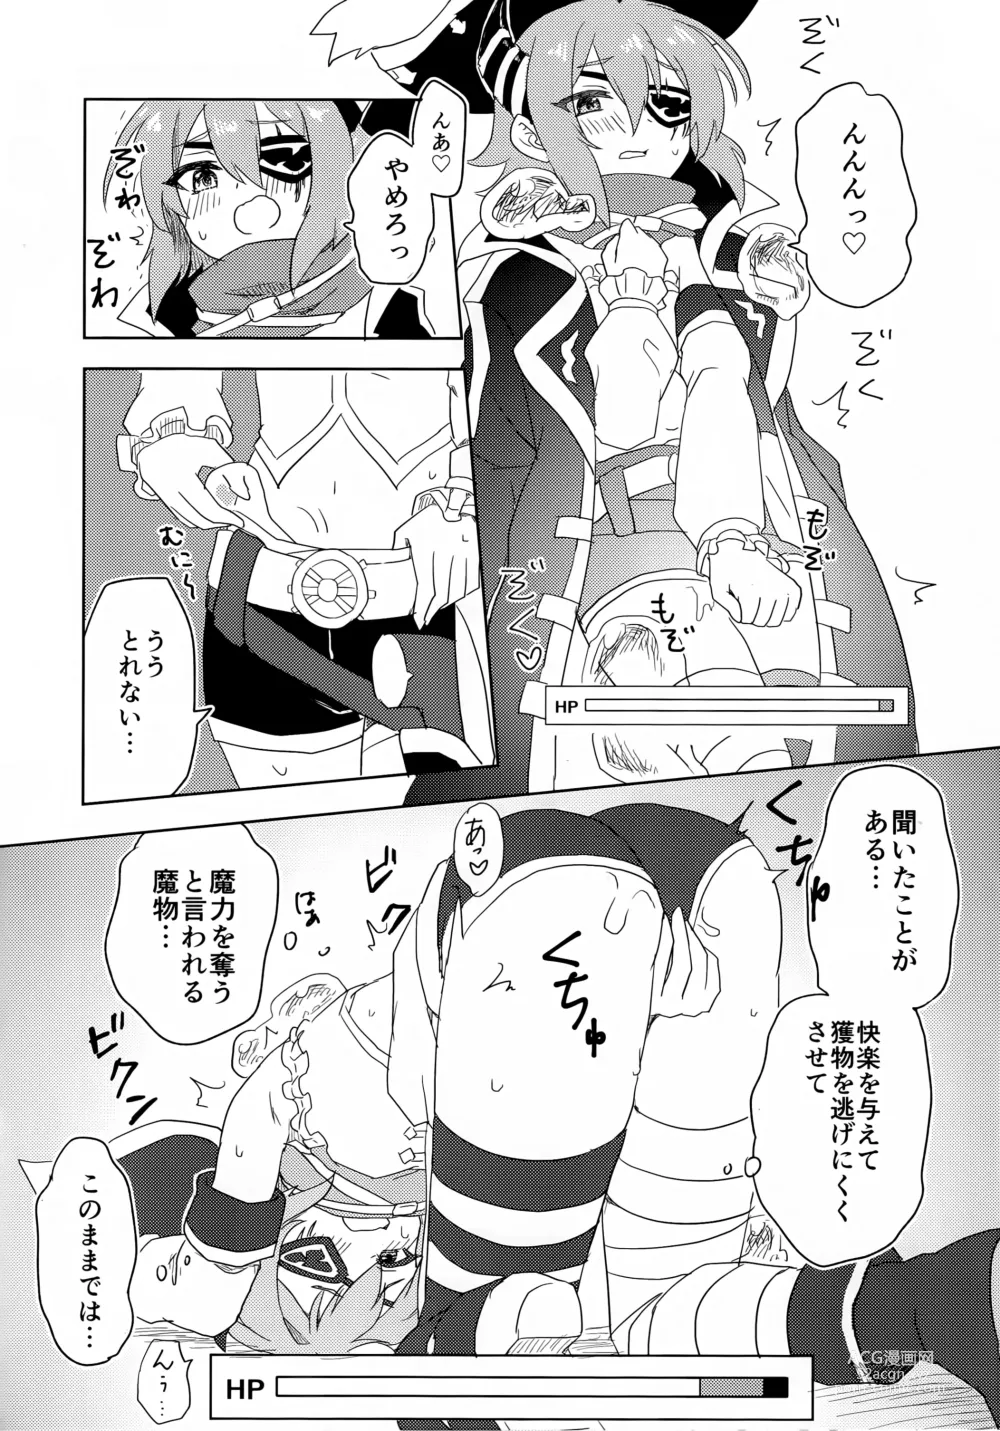 Page 6 of doujinshi Anna-chan to Ero Trap Dungeon